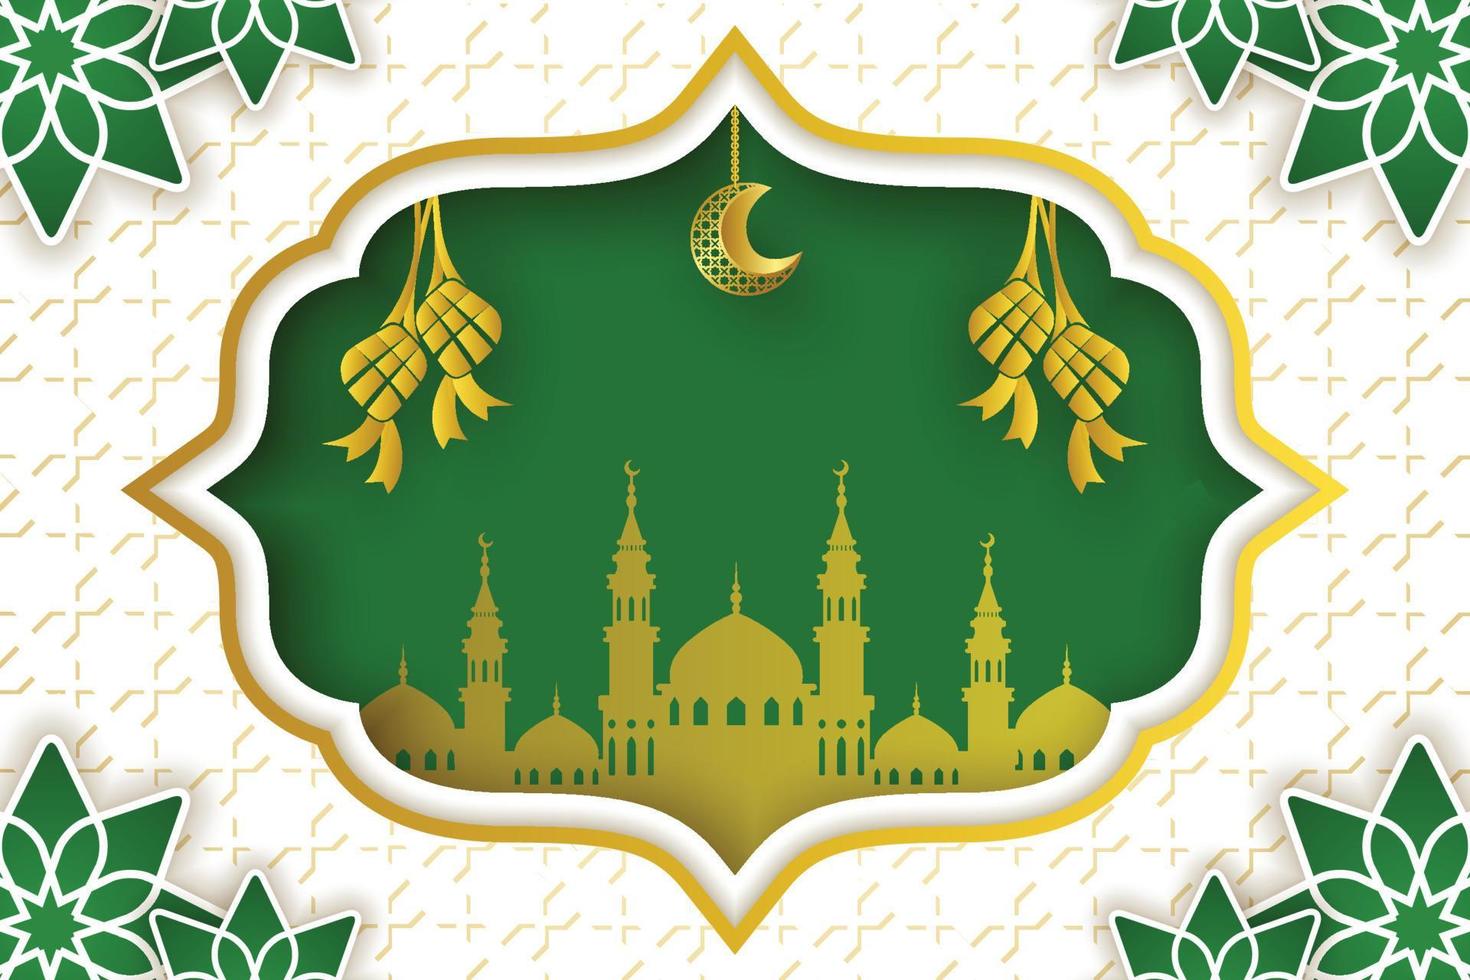 ramadan kareem hintergrundschablonendesignvektor, eid mubarak, mit sichelförmiger hängender verzierung, goldene farbe vektor